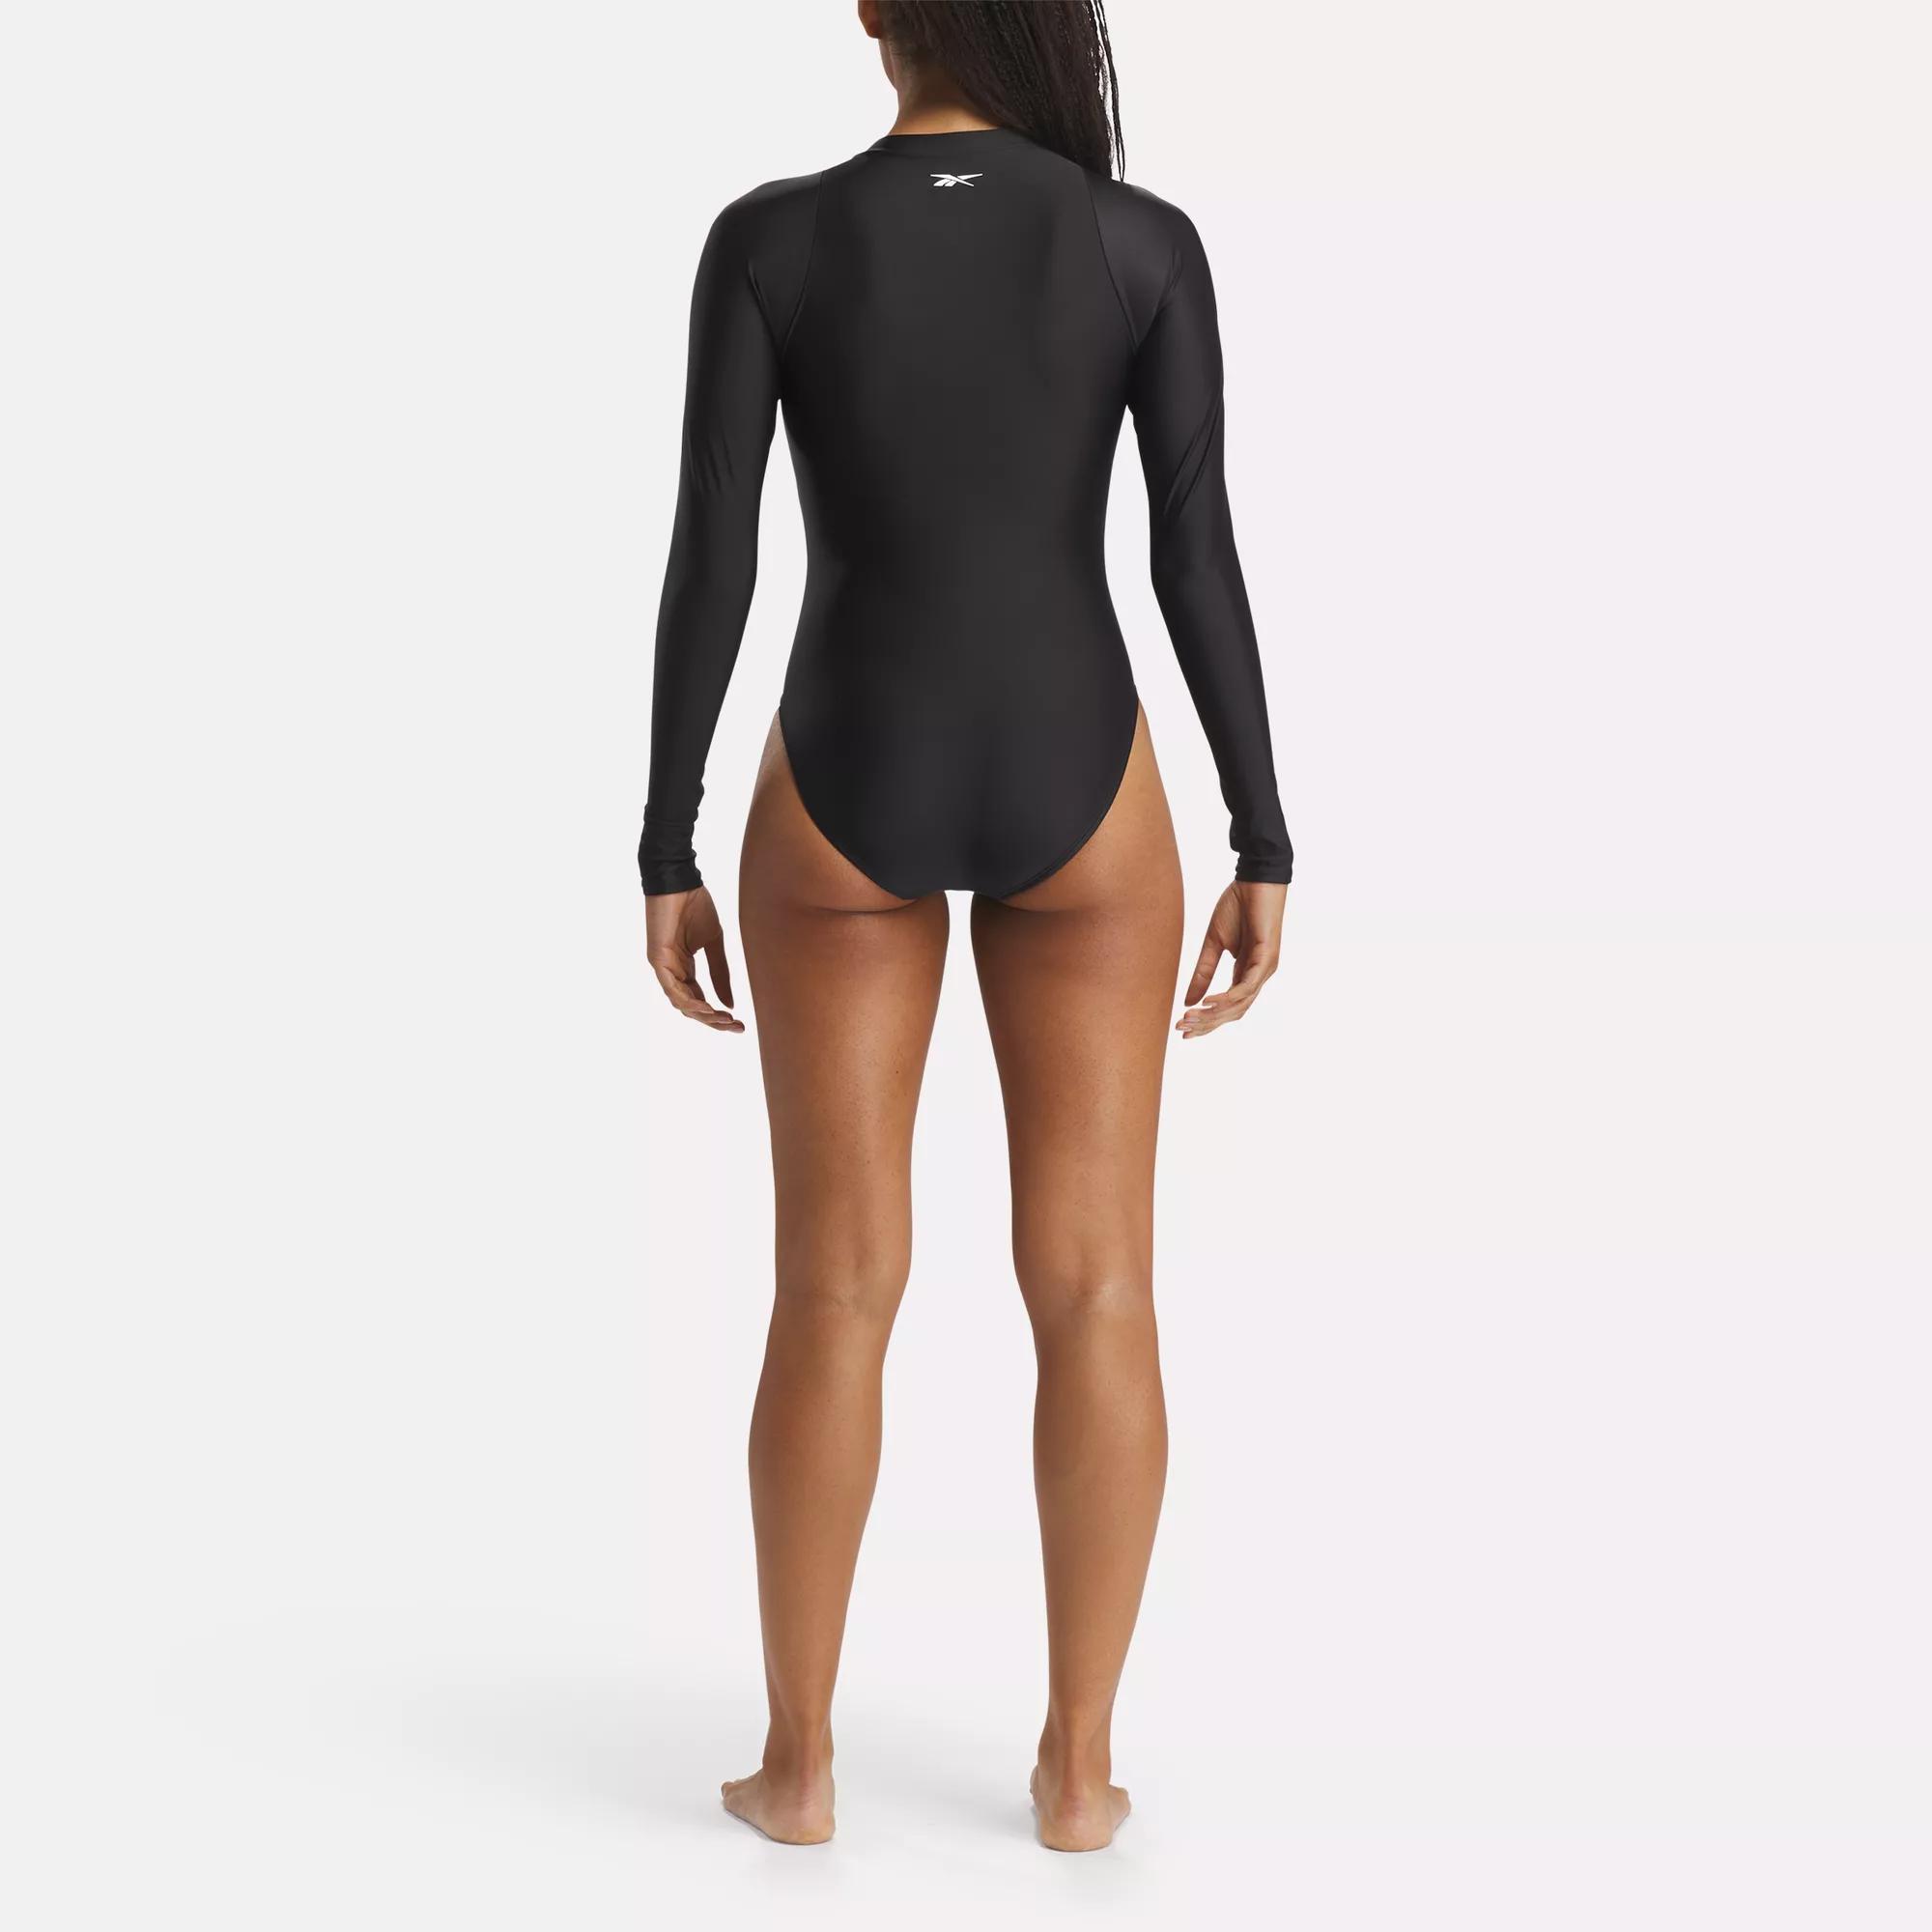 Opperiaya Women Long Sleeve Zipper One-piece Swimsuit Stylish